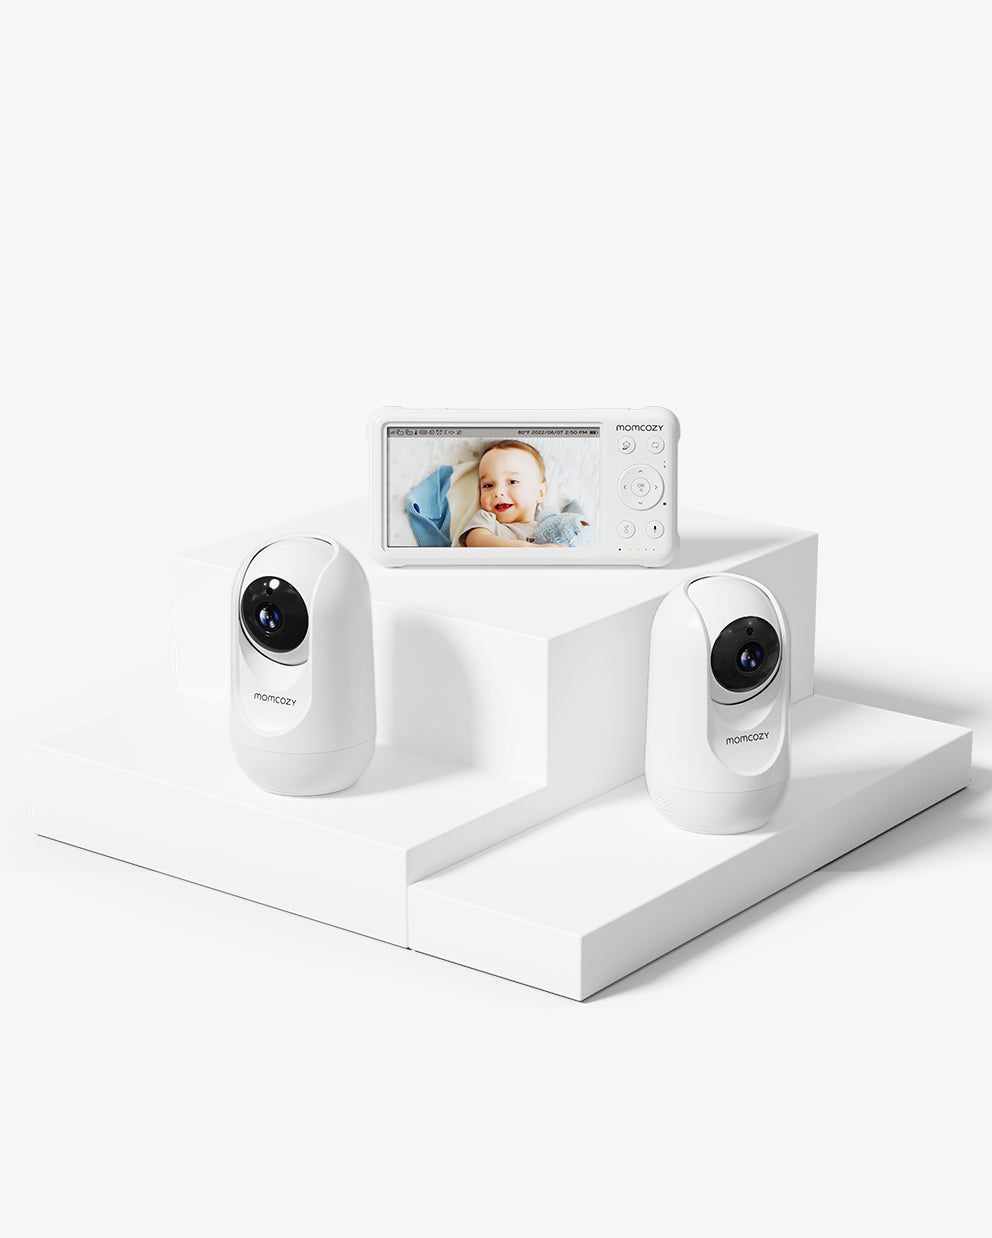 Babysense 5 HD Baby Monitor, Video Baby Monitor with Camera and